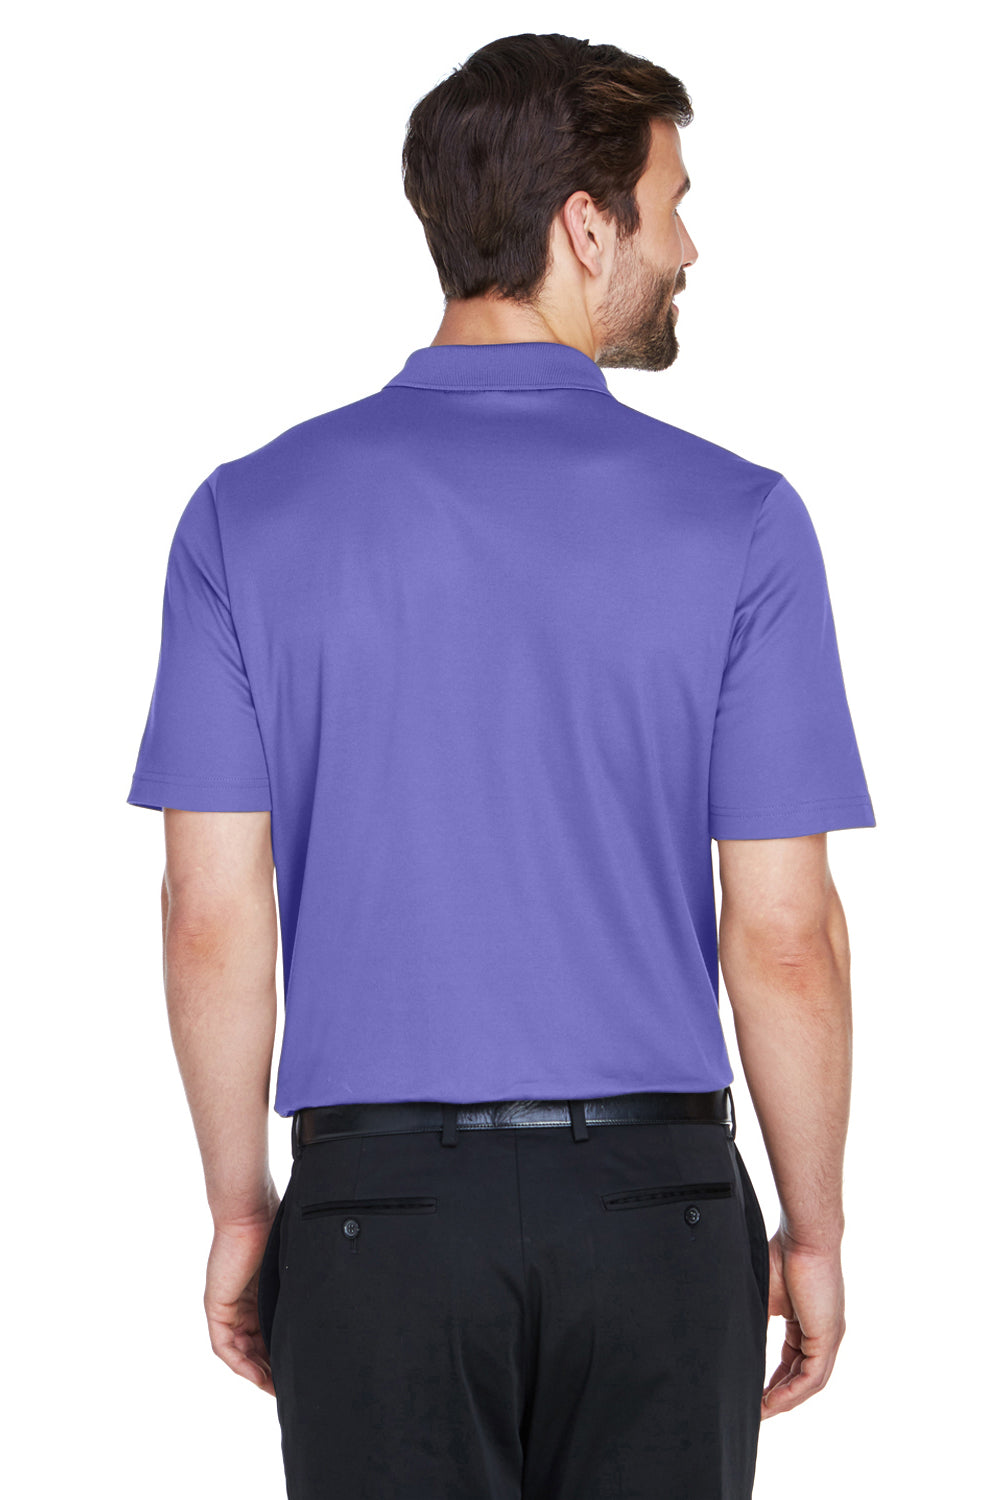 Devon & Jones DG20 CrownLux Performance Moisture Wicking Short Sleeve Polo Shirt Grape Purple Back